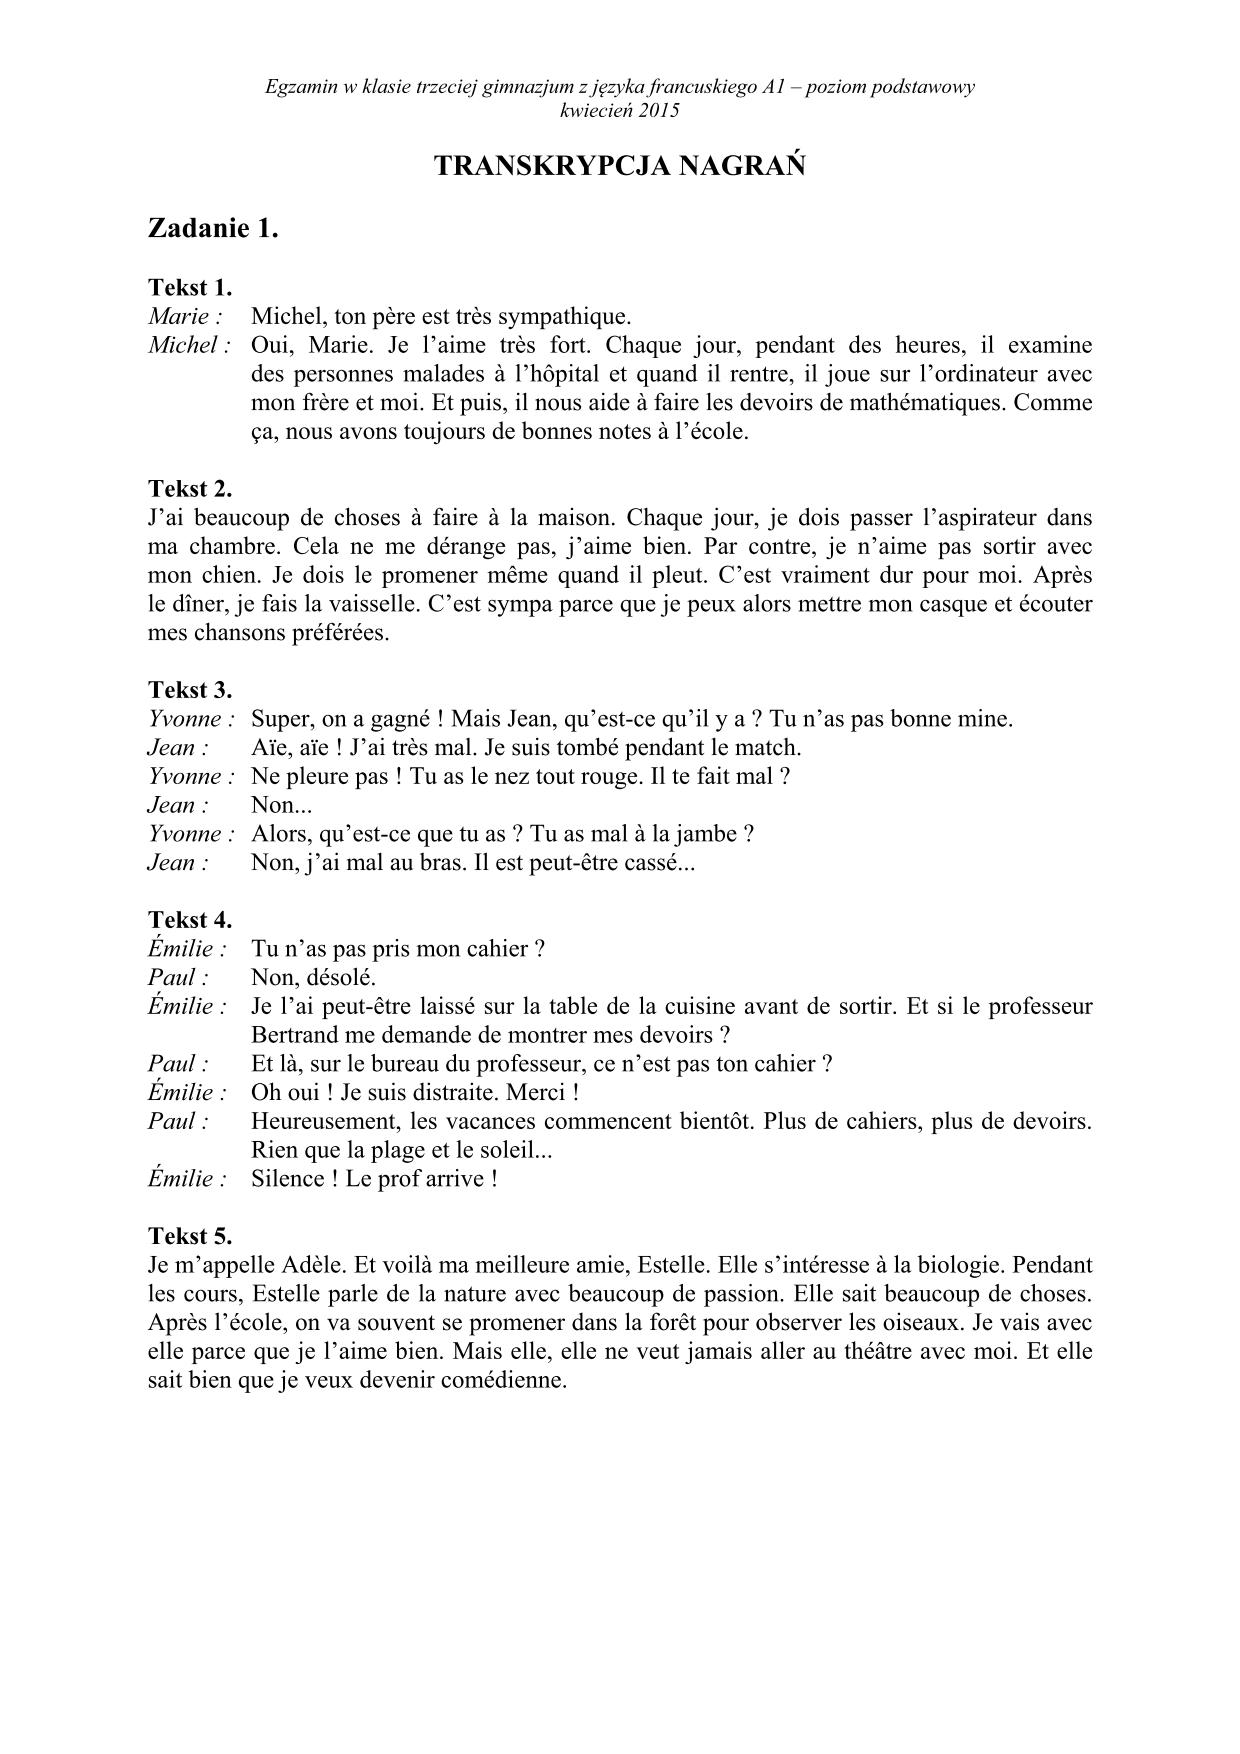 transkrypcja-francuski-poziom-podstawowy-egzamin-gimnazjalny-2015-1